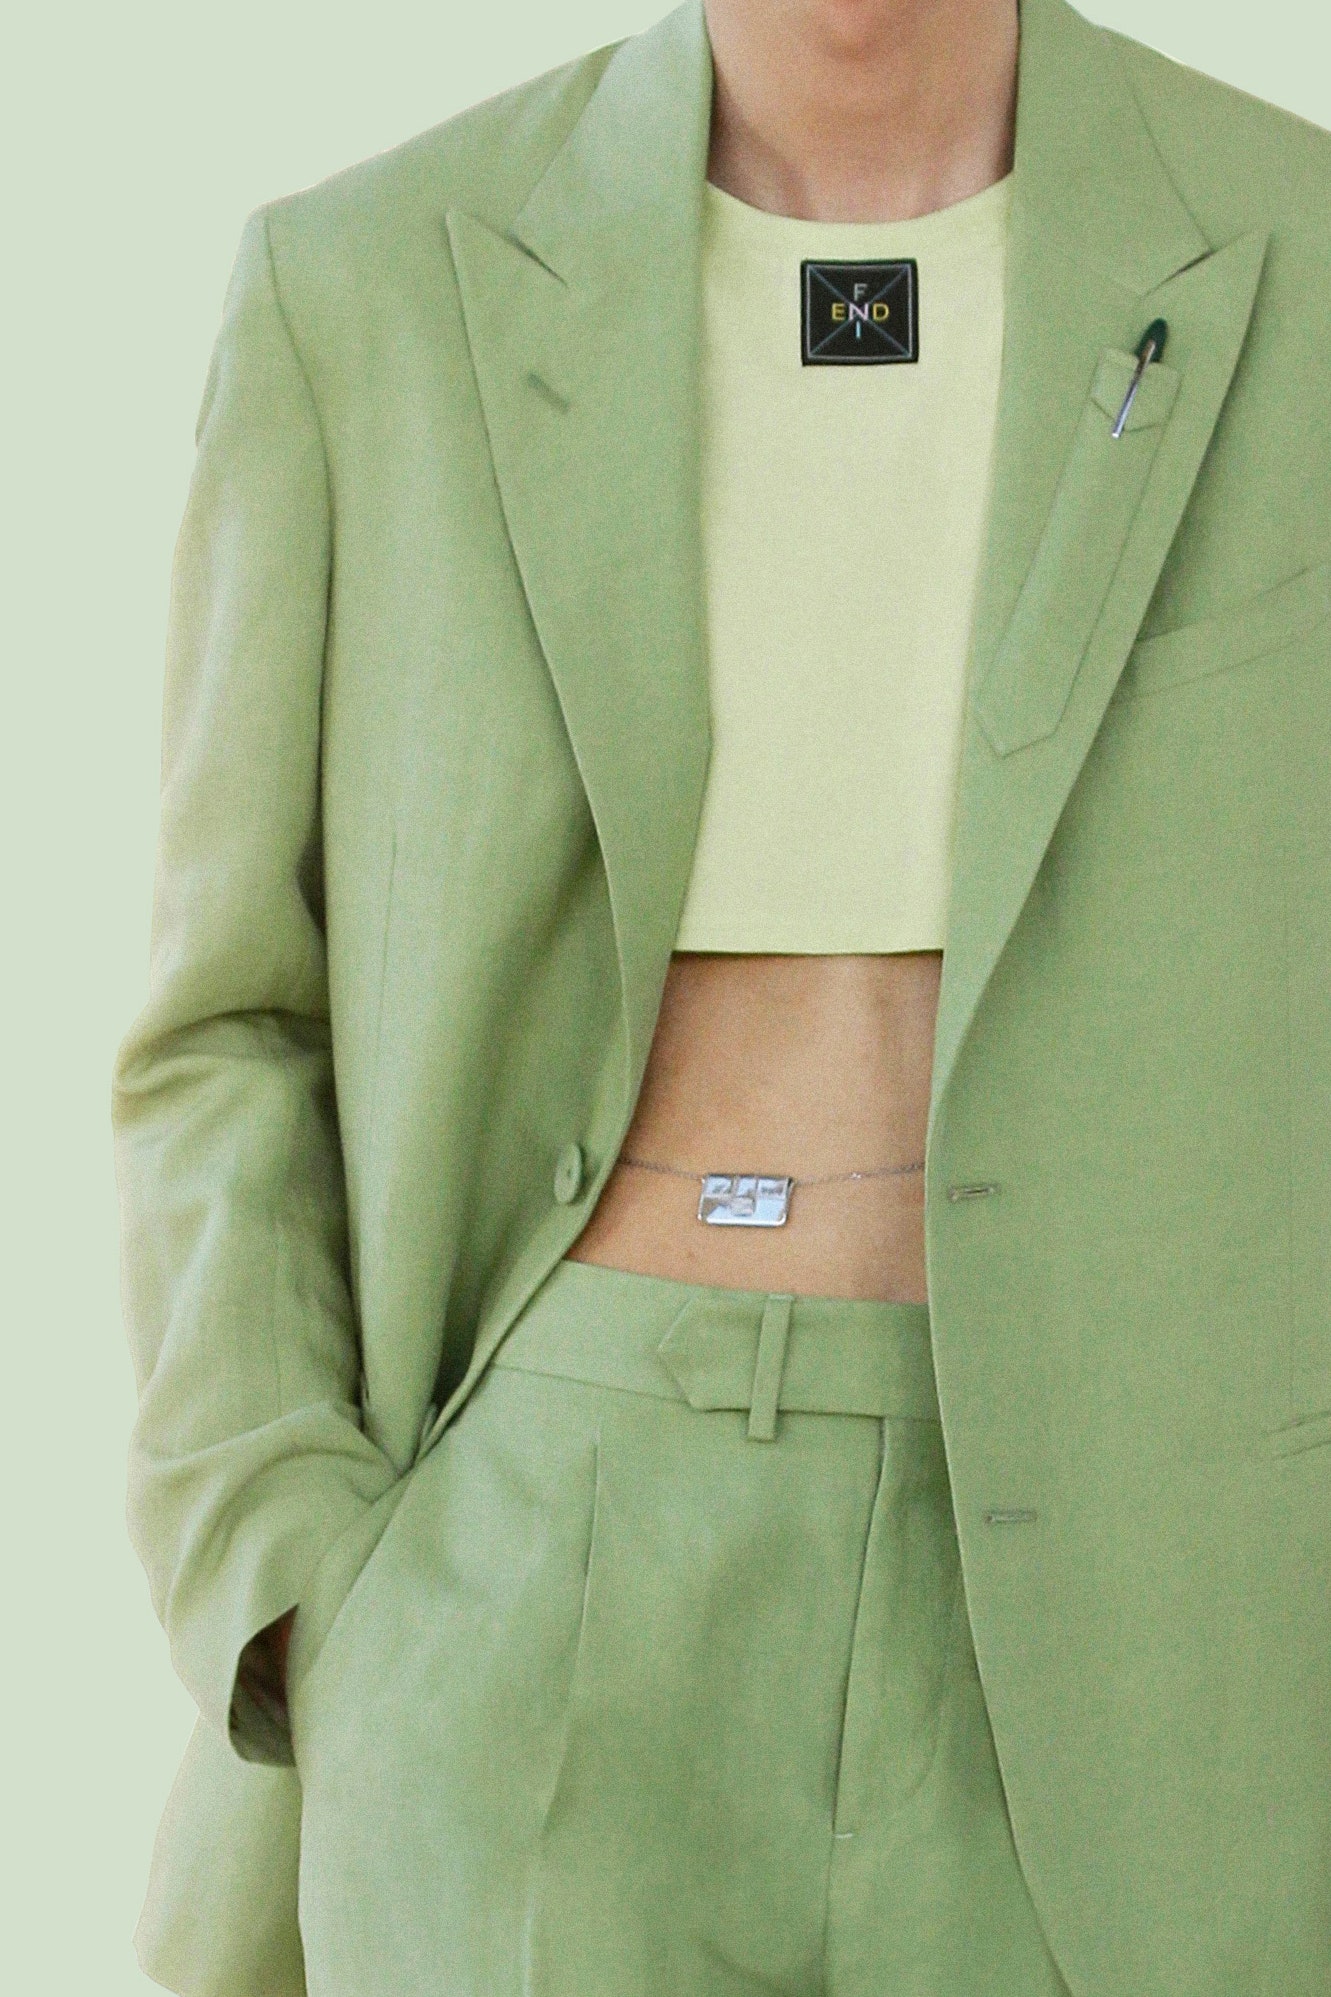 Fendi menswear весналето 2022 посмотрите на поясцепочку с сумкой Baguette из новой коллекции Сильвии Вентурини Фенди